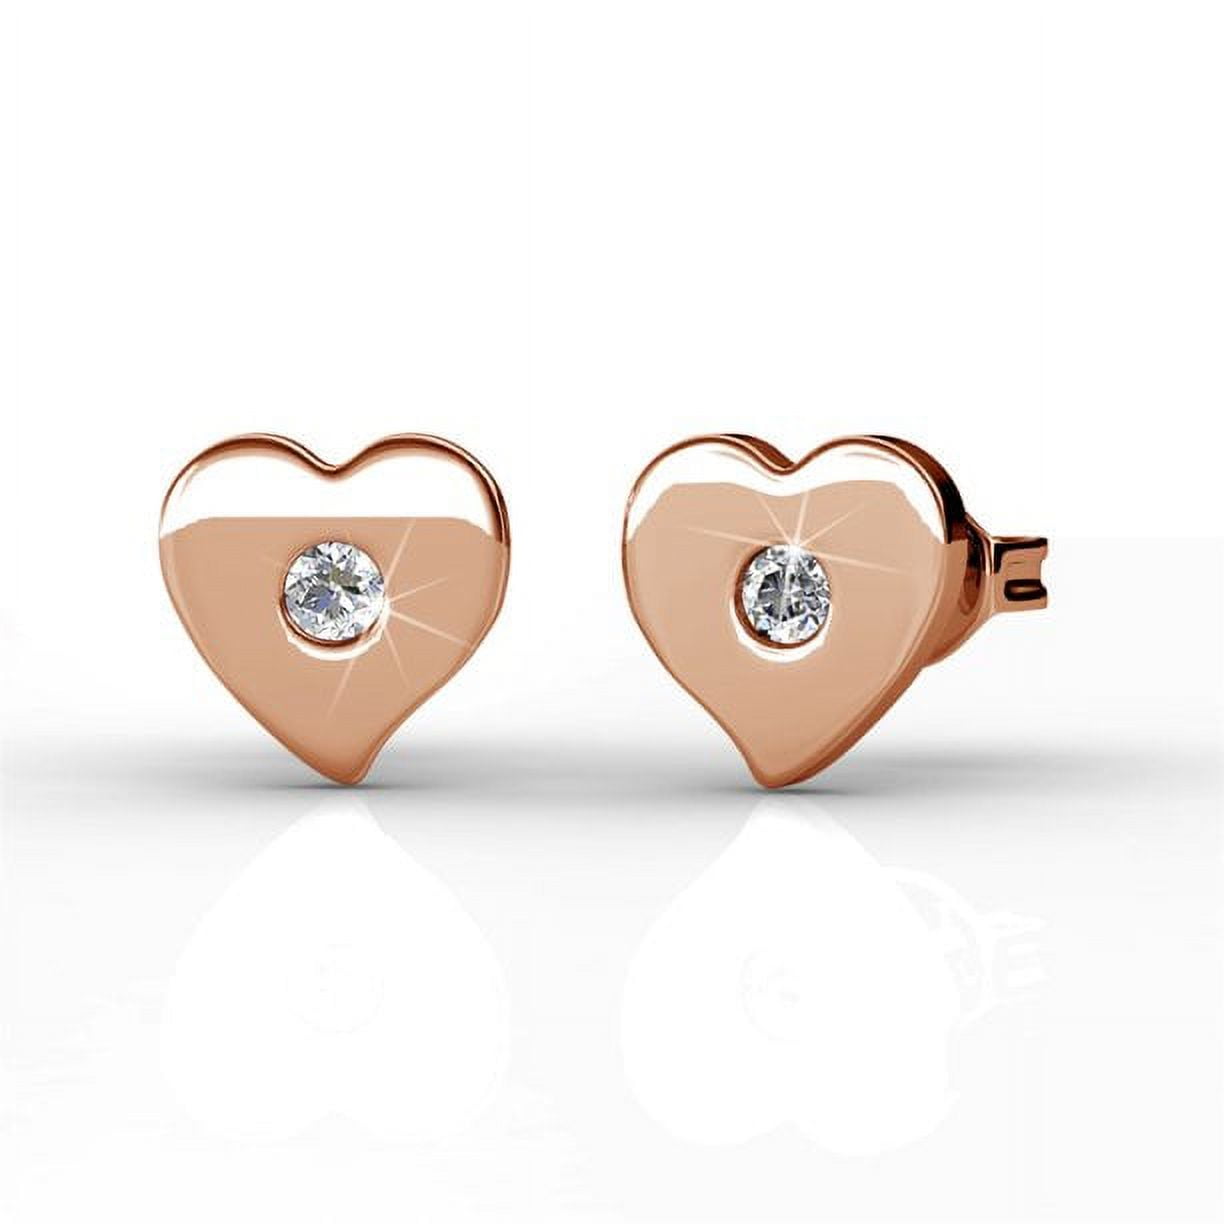 Buy Tiny Heart Earrings Heart Stud Earrings Perfect Simple Earrings for Her  Minimalist Cartilage Earrings Gift for Girlfriend ER090 Online in India -  Etsy